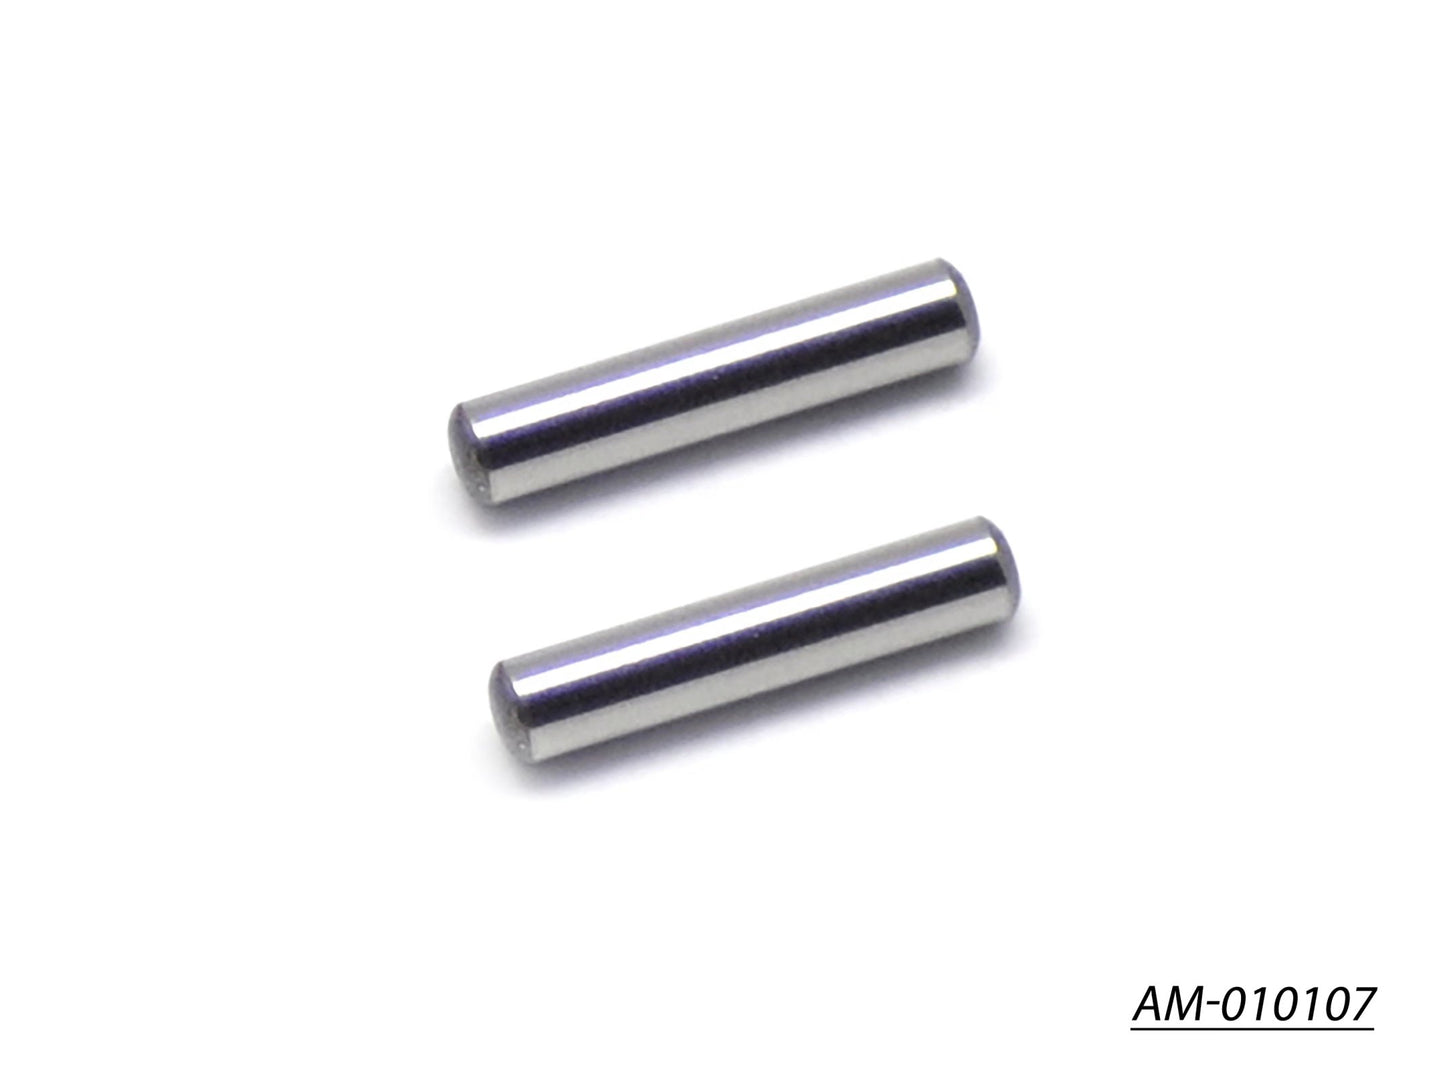 Pin Set For Yokomo B-Max Drive Shaft (AM-010107)